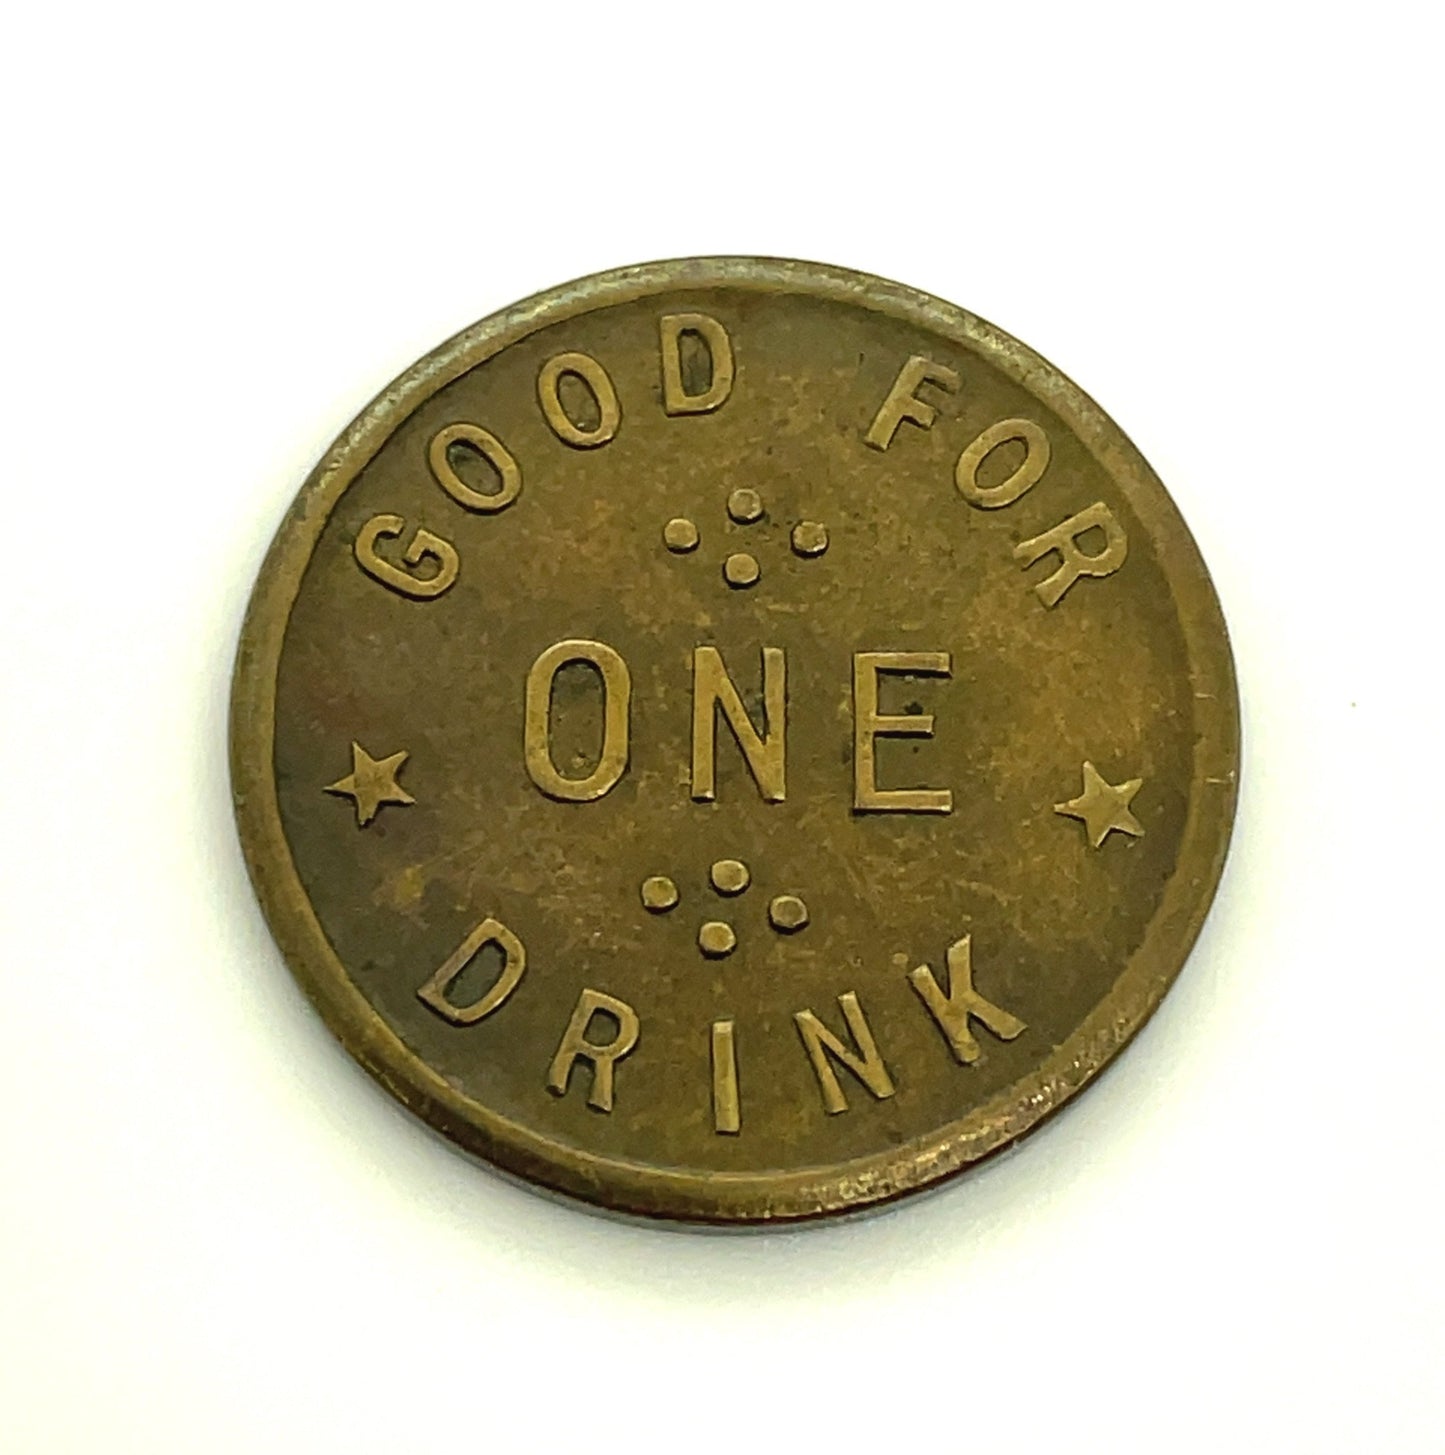 Rocco Saloon Jamestown Calif California Token: Good For One Drink